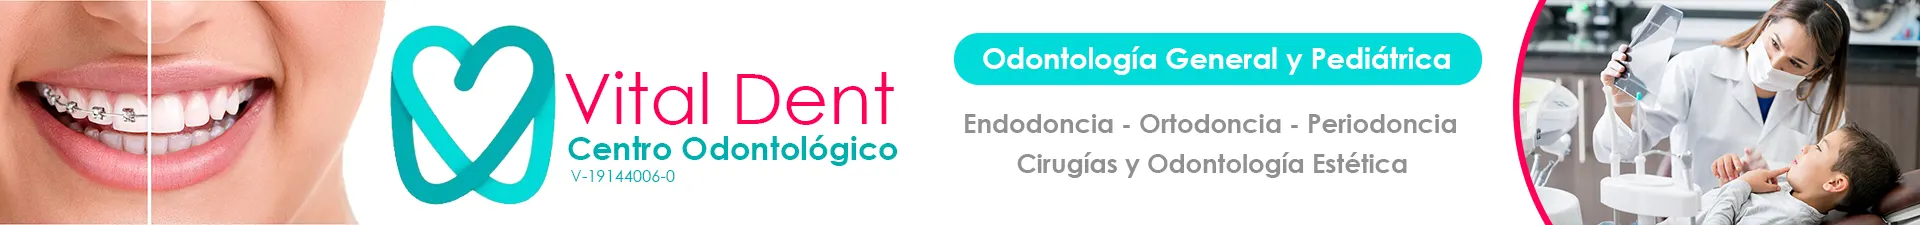 Imagen 1 del perfil de Vital Dent Centro Odontológico